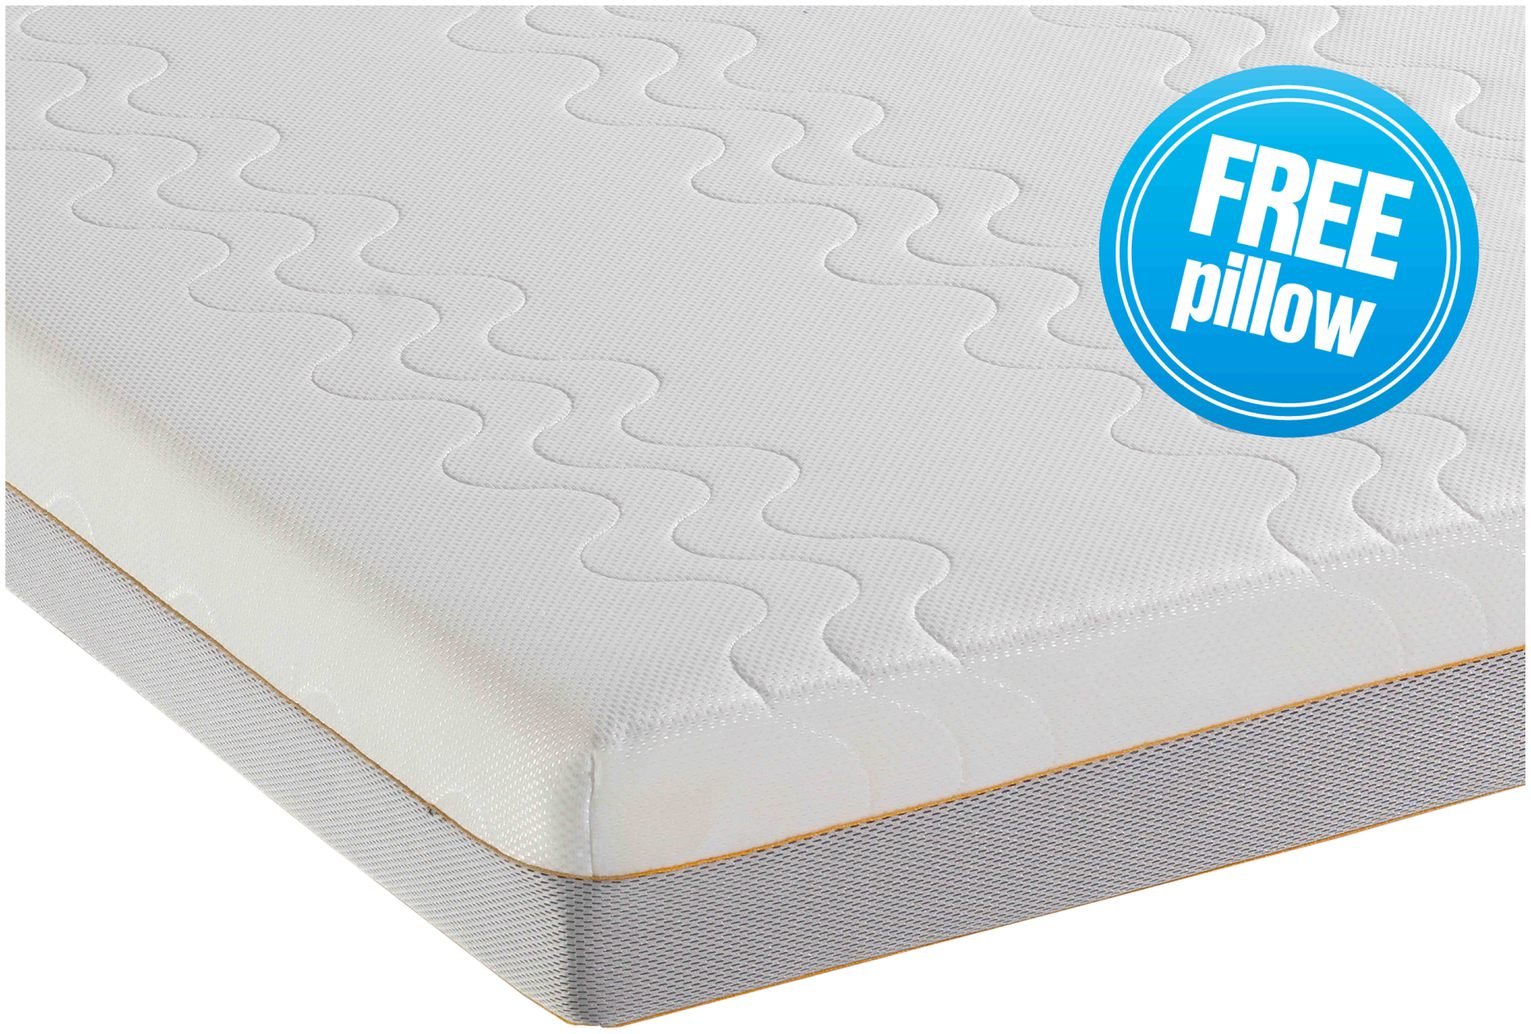 super single foam mattress